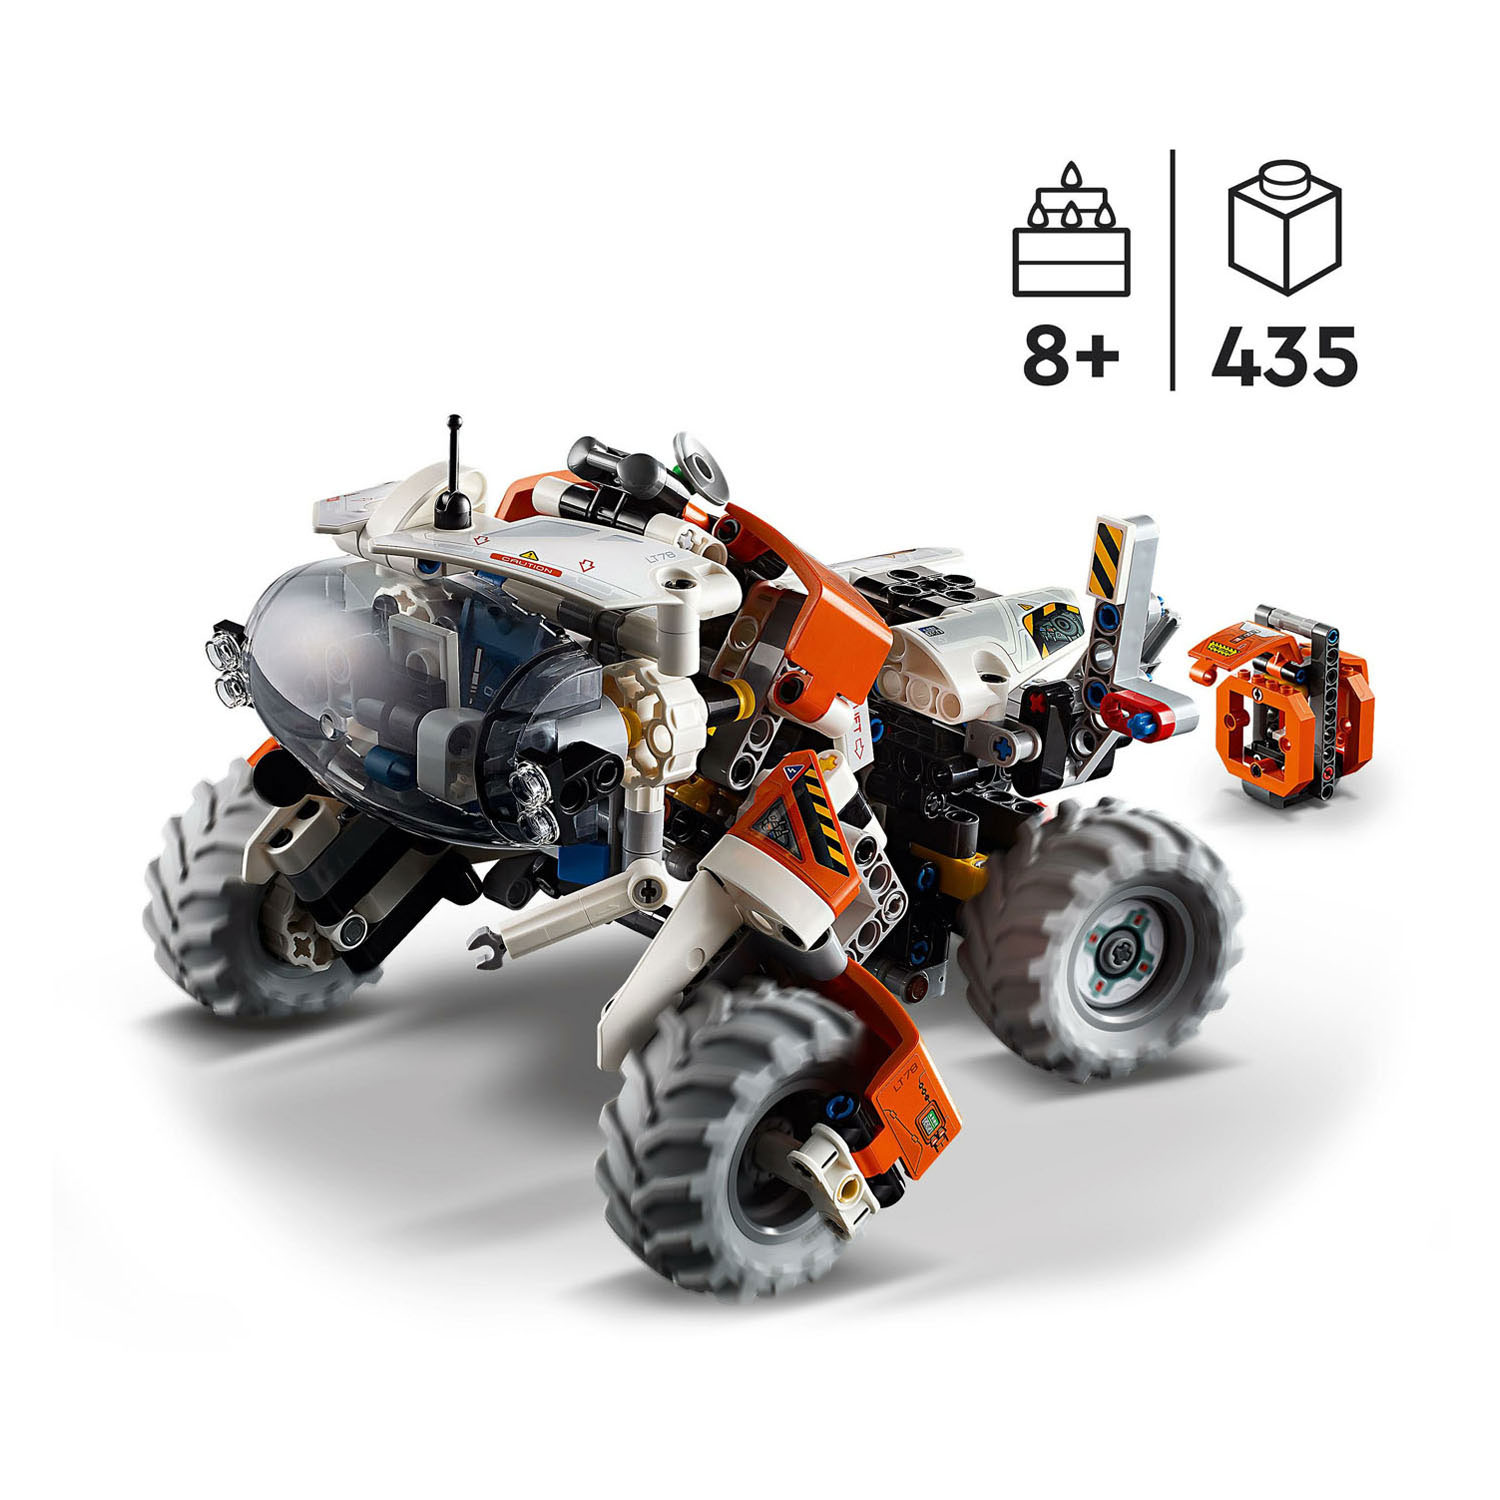 LEGO Technic 42178 Ruimtevoertuig LT78